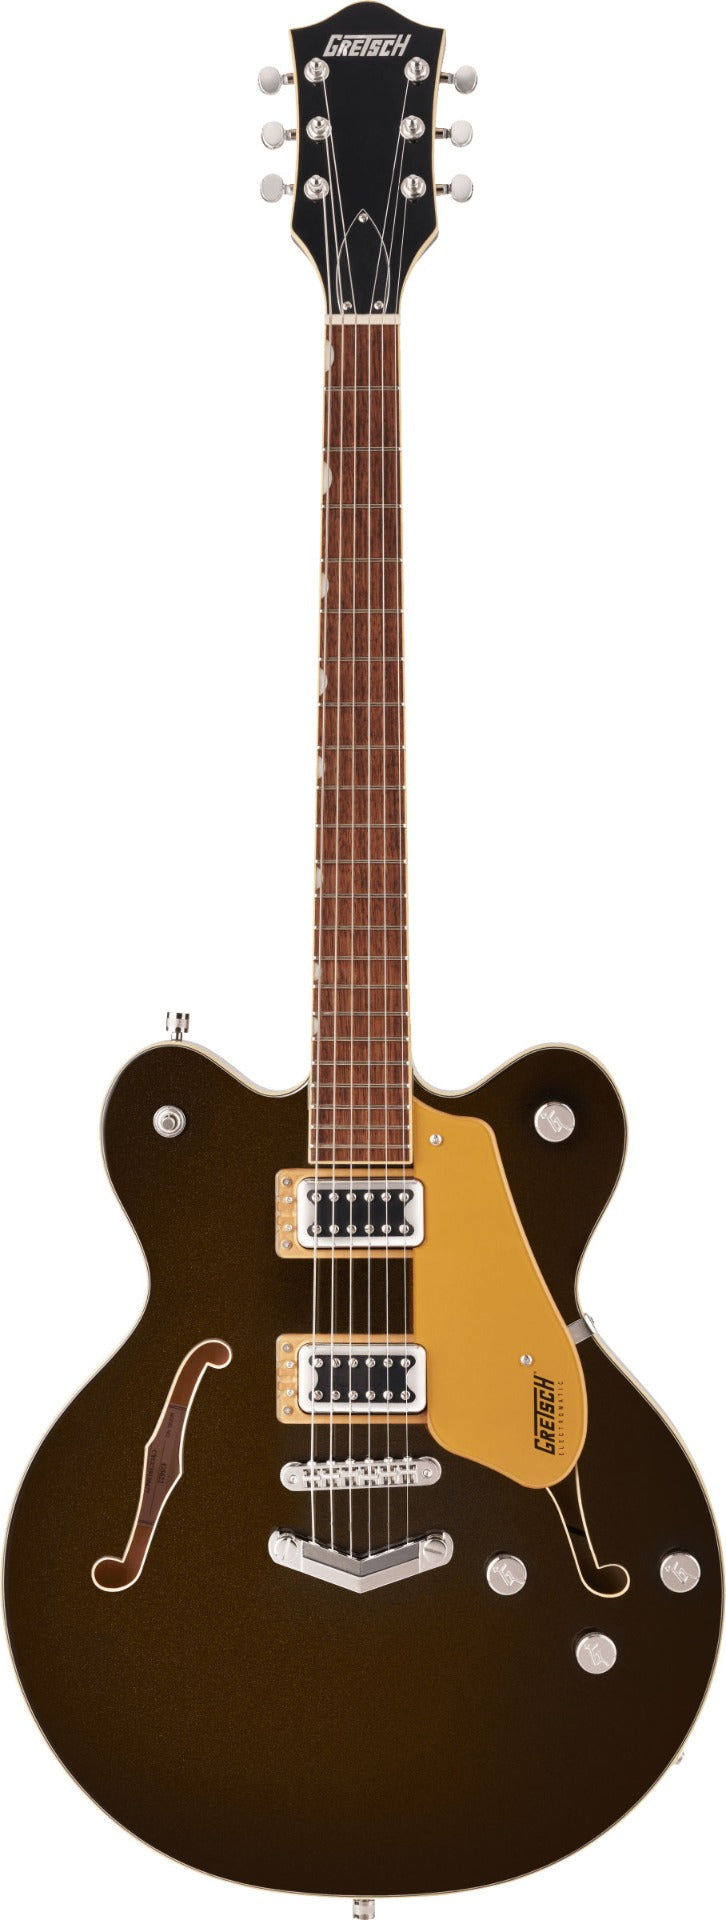 Grestch G5622 Electromatic Center Block Double Cut Electric Guitar in Black Gold